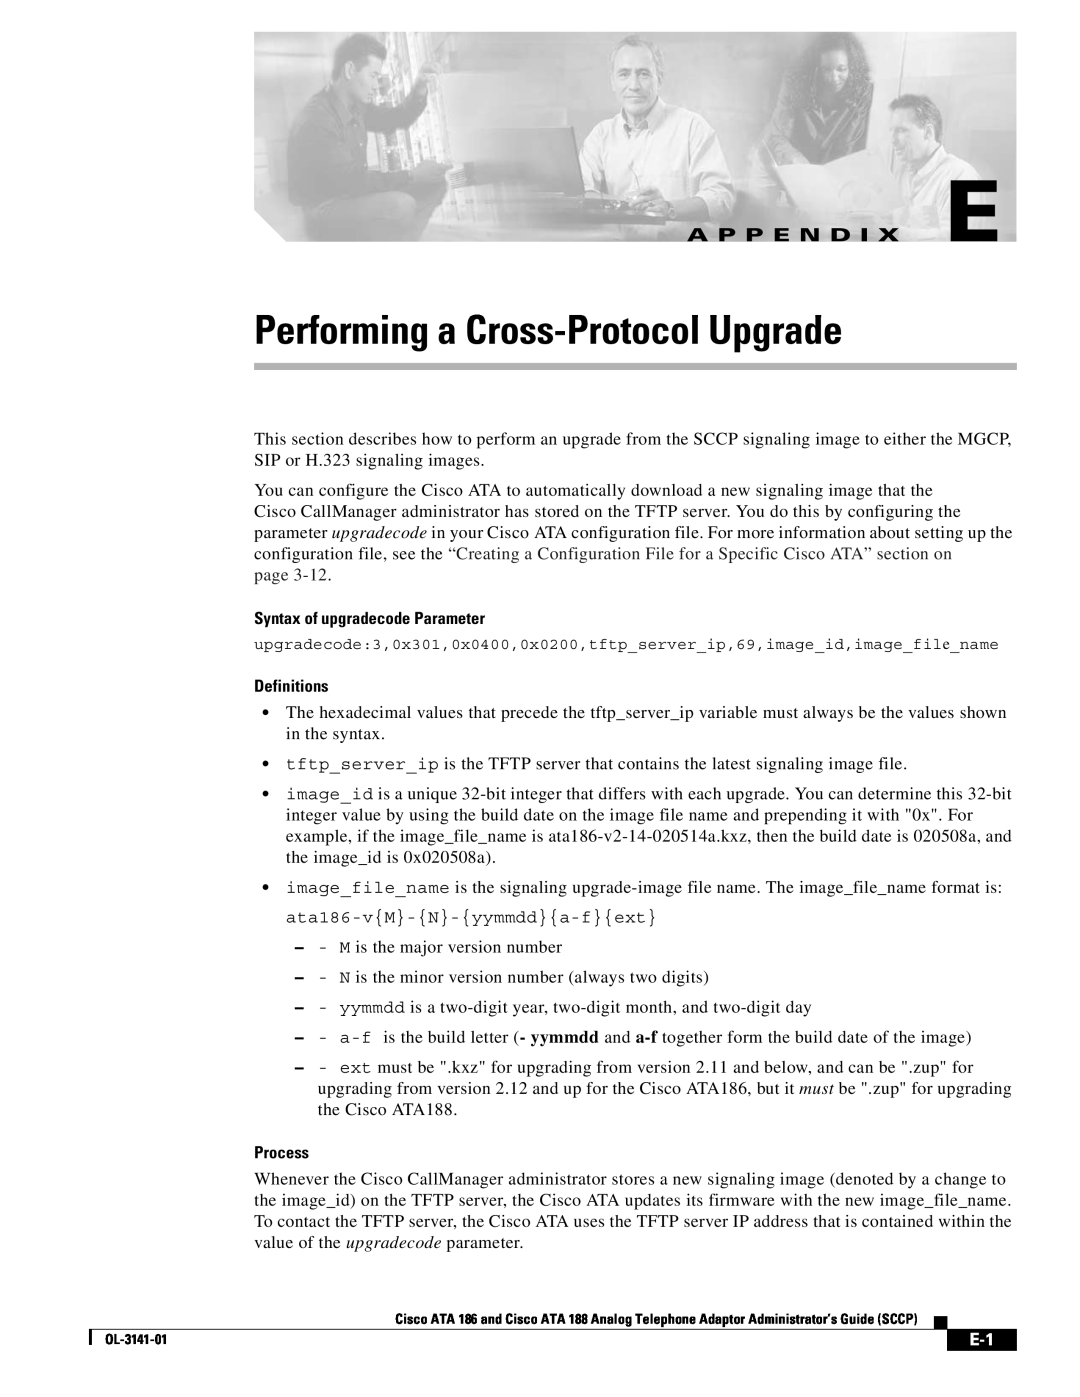 Cisco Systems ATA 188 manual Performing a Cross-Protocol Upgrade, A P P E N D I X E, page, Syntax of upgradecode Parameter 